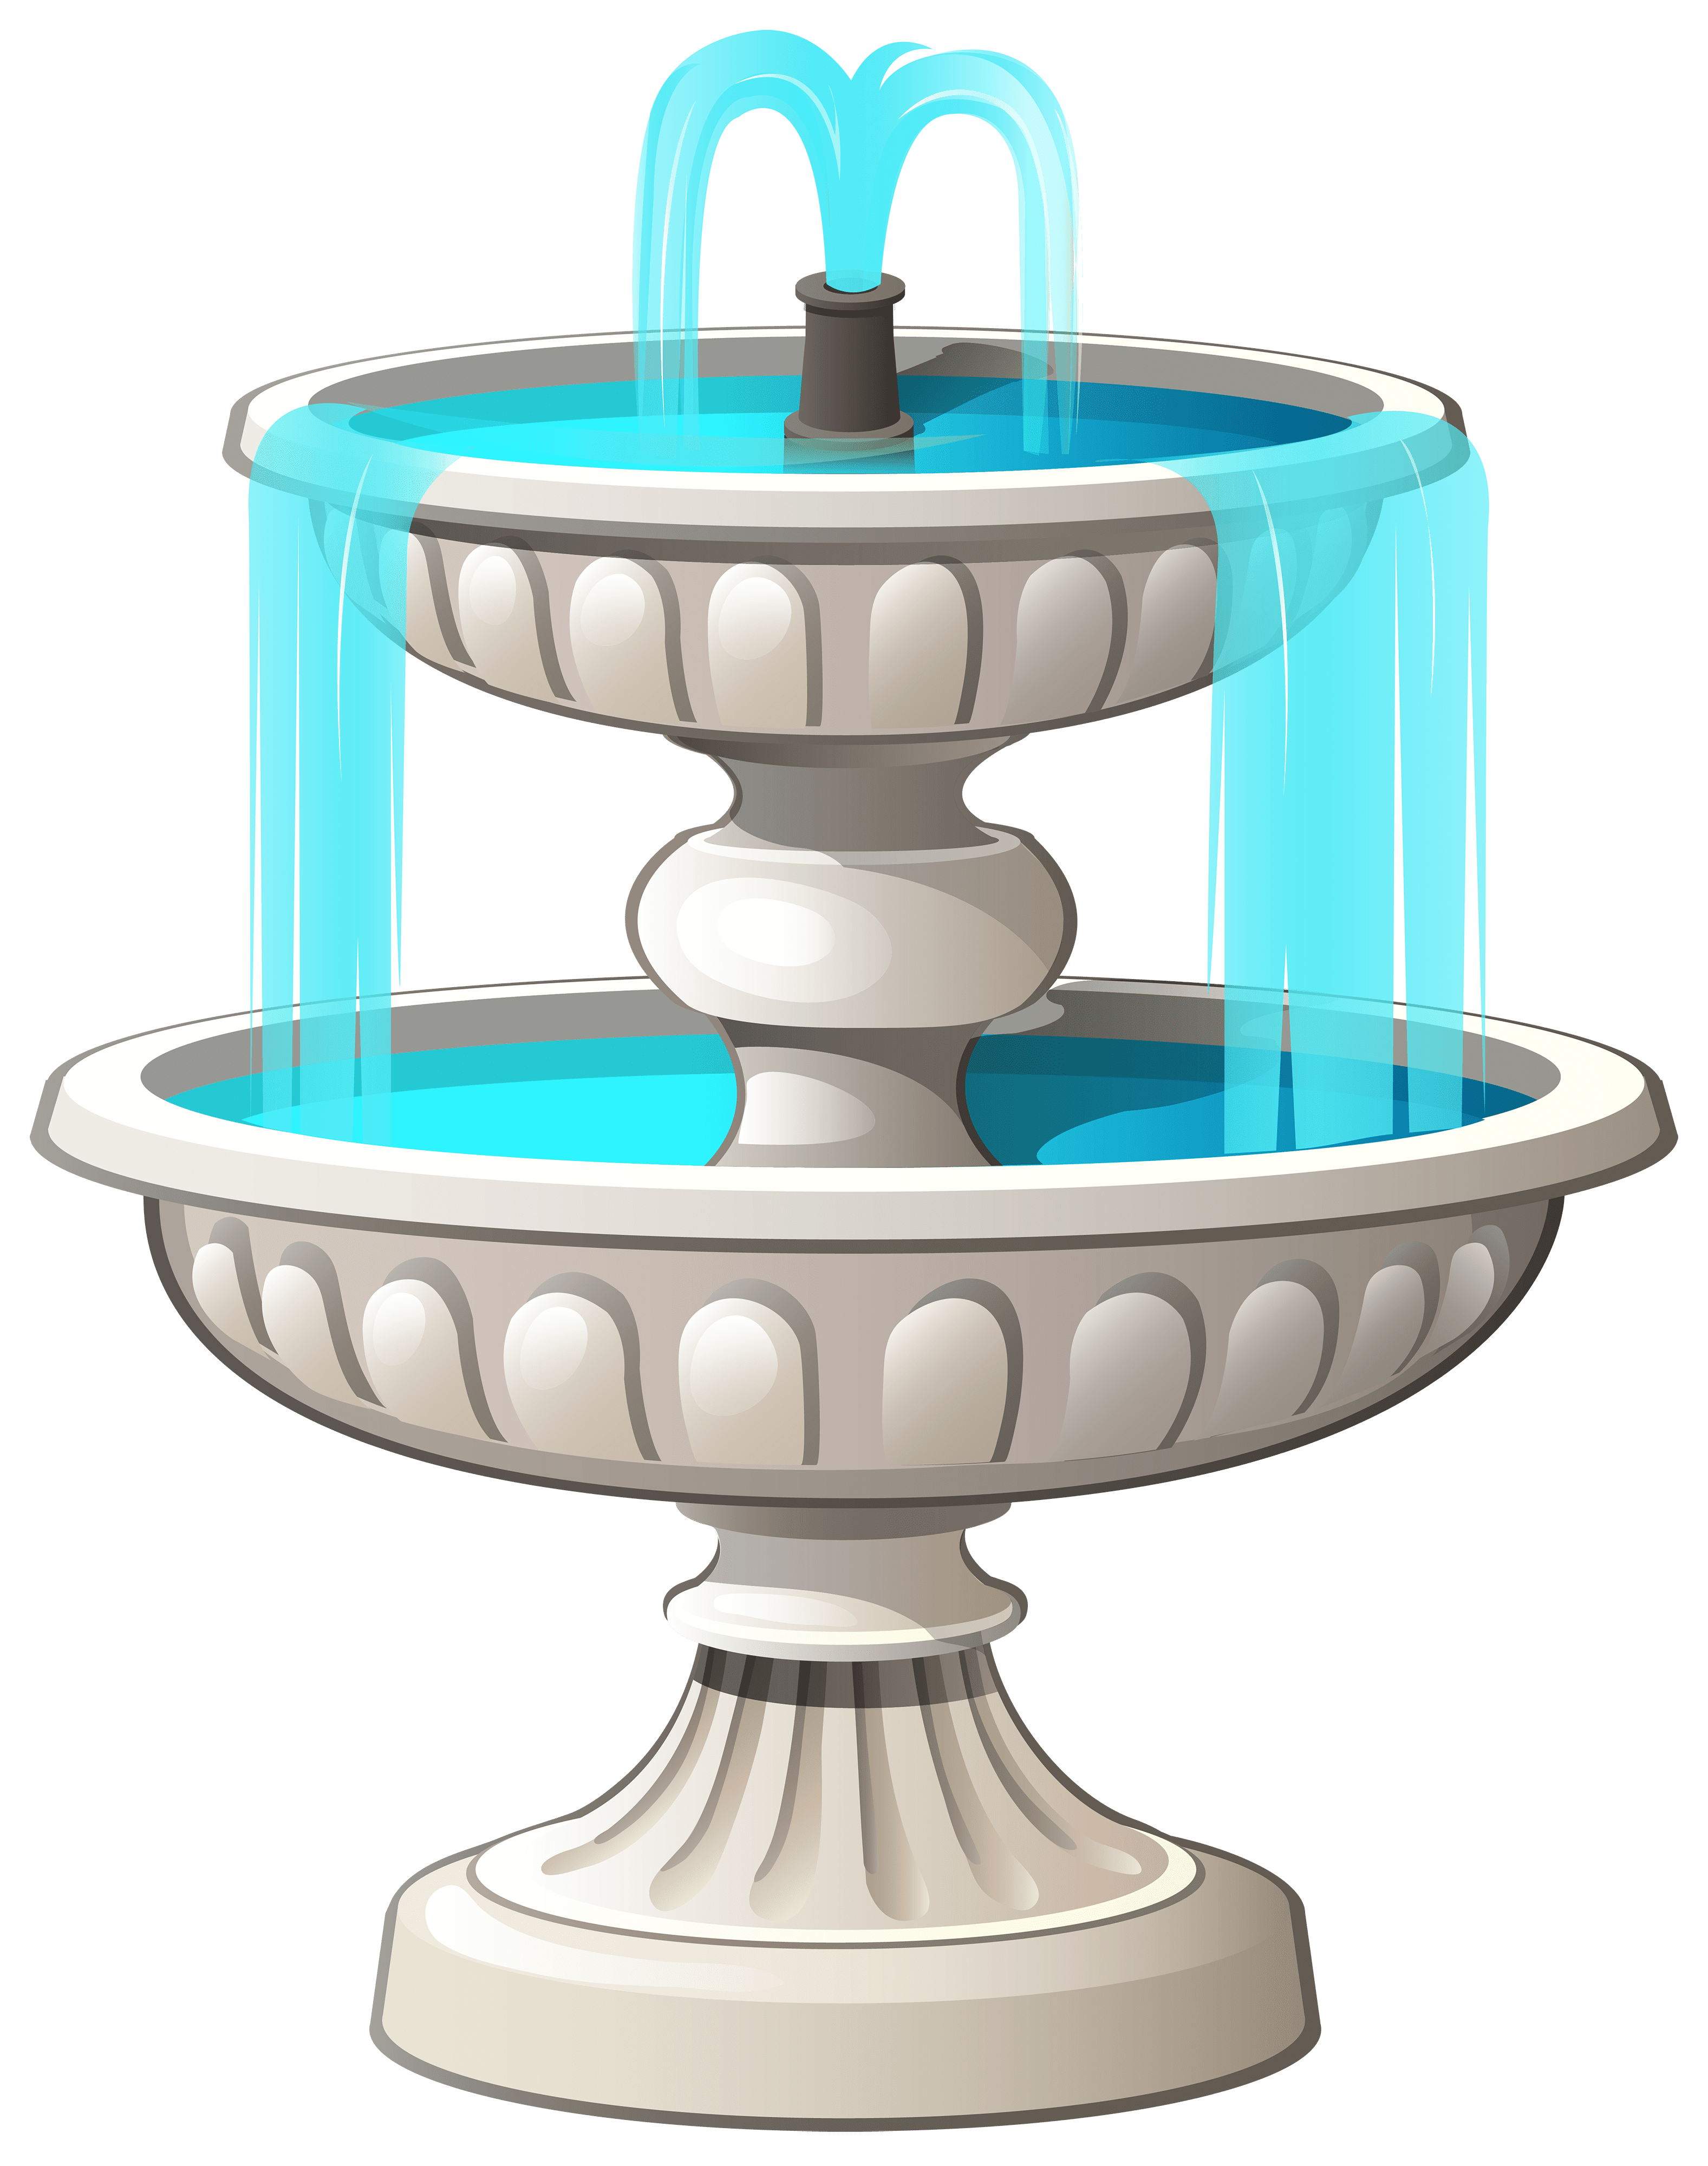 Fountain clipart round water, Fountain round water